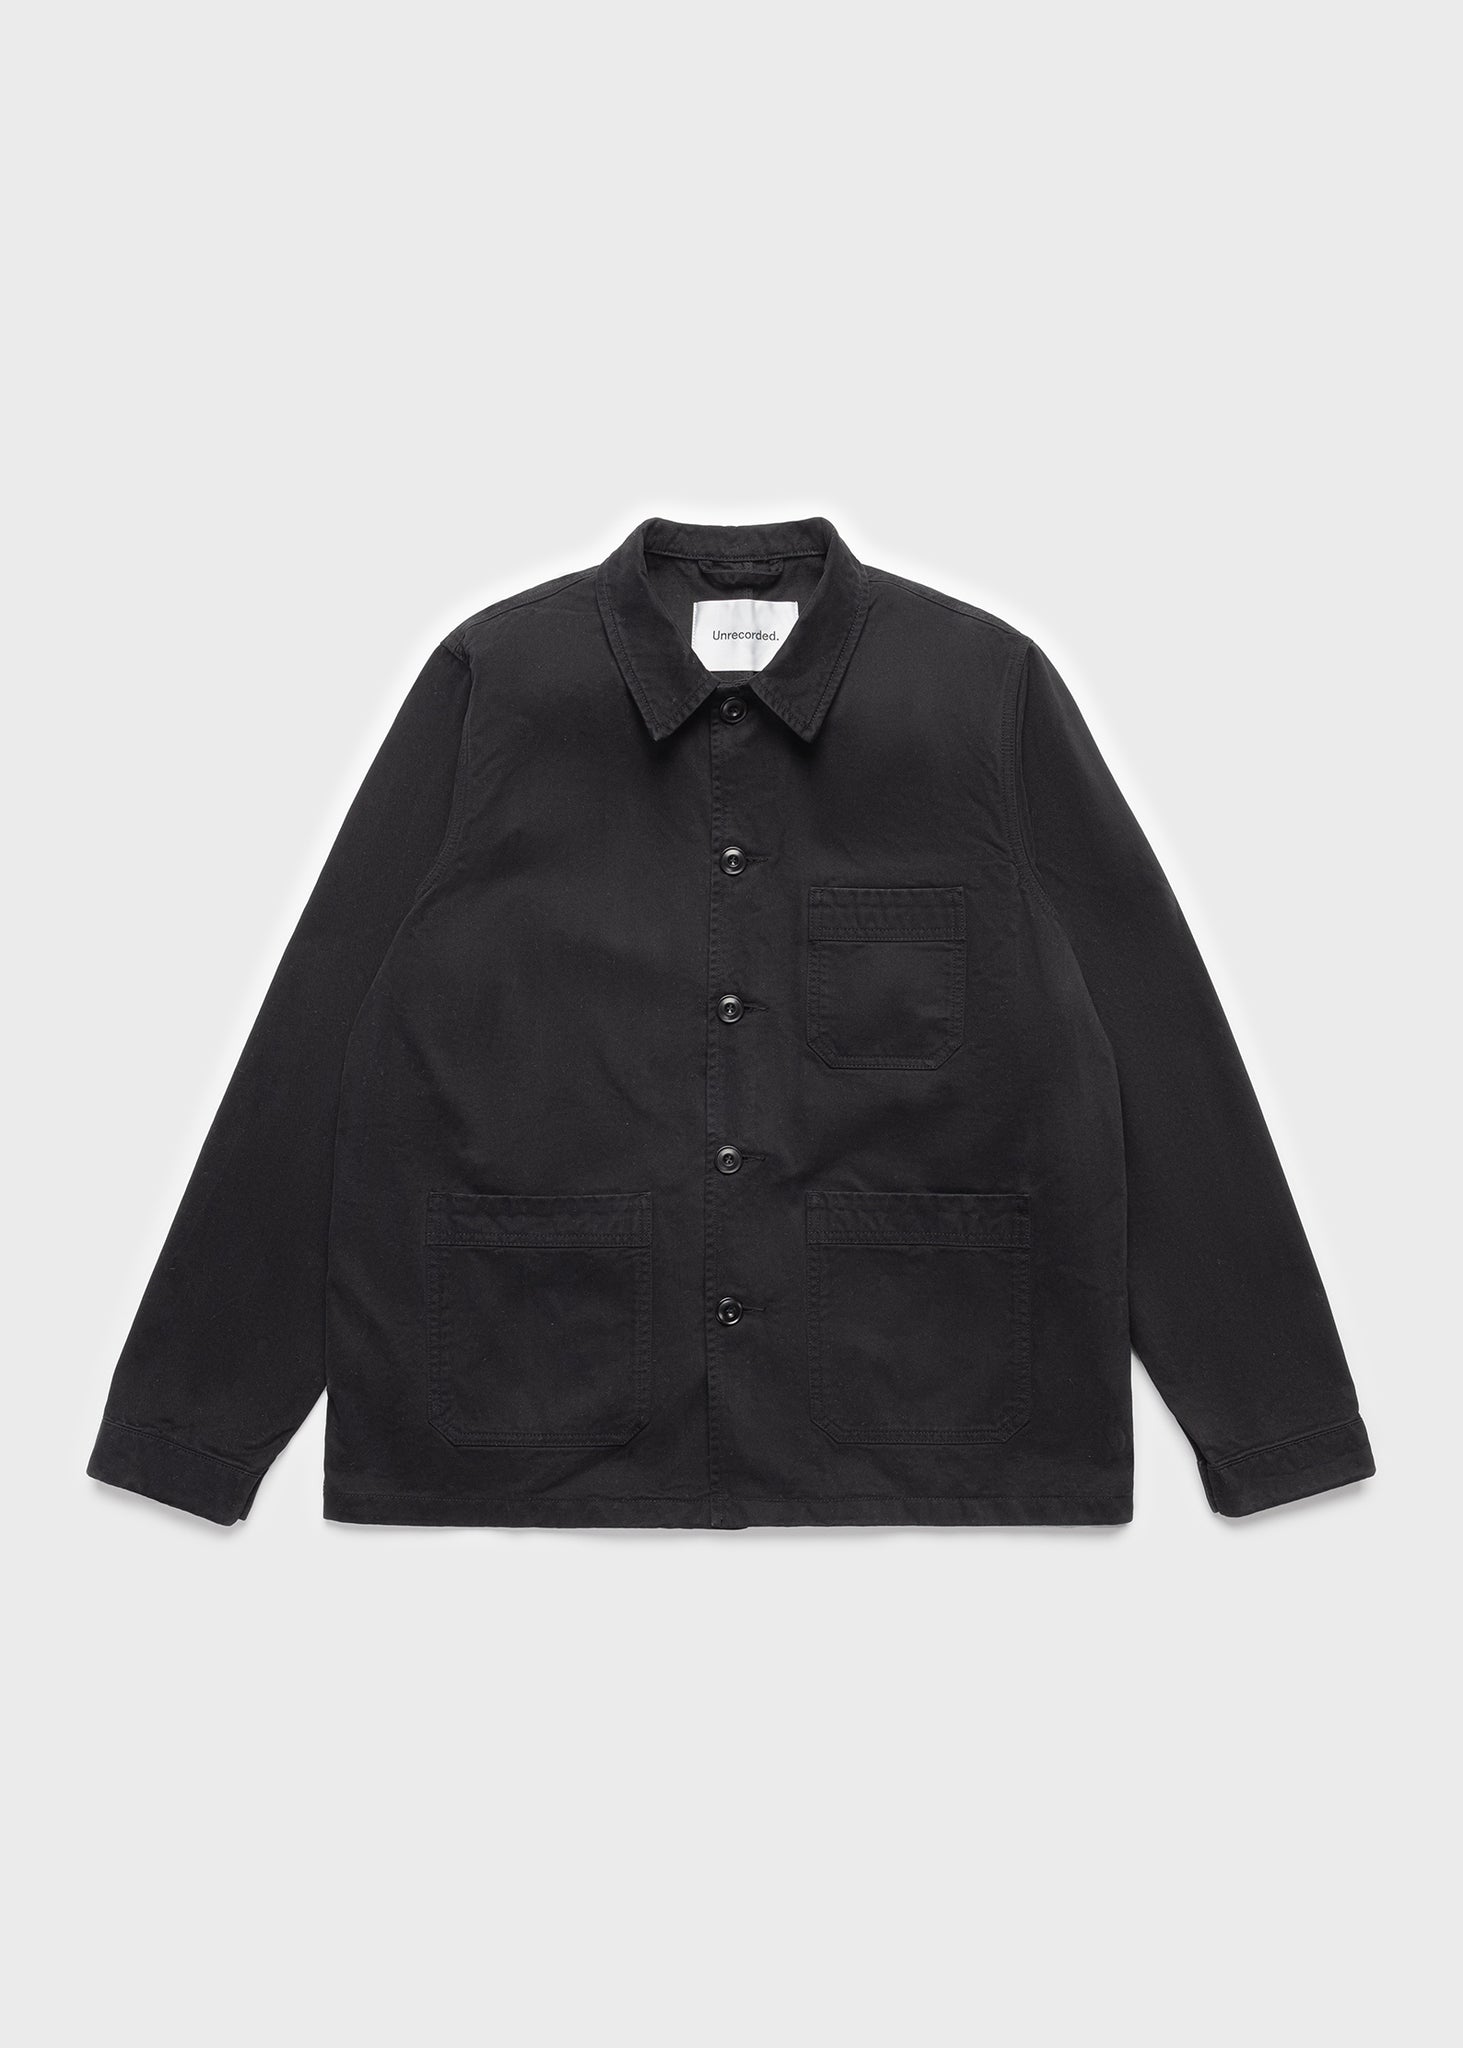 Worker Jacket - Black – UNRECORDED